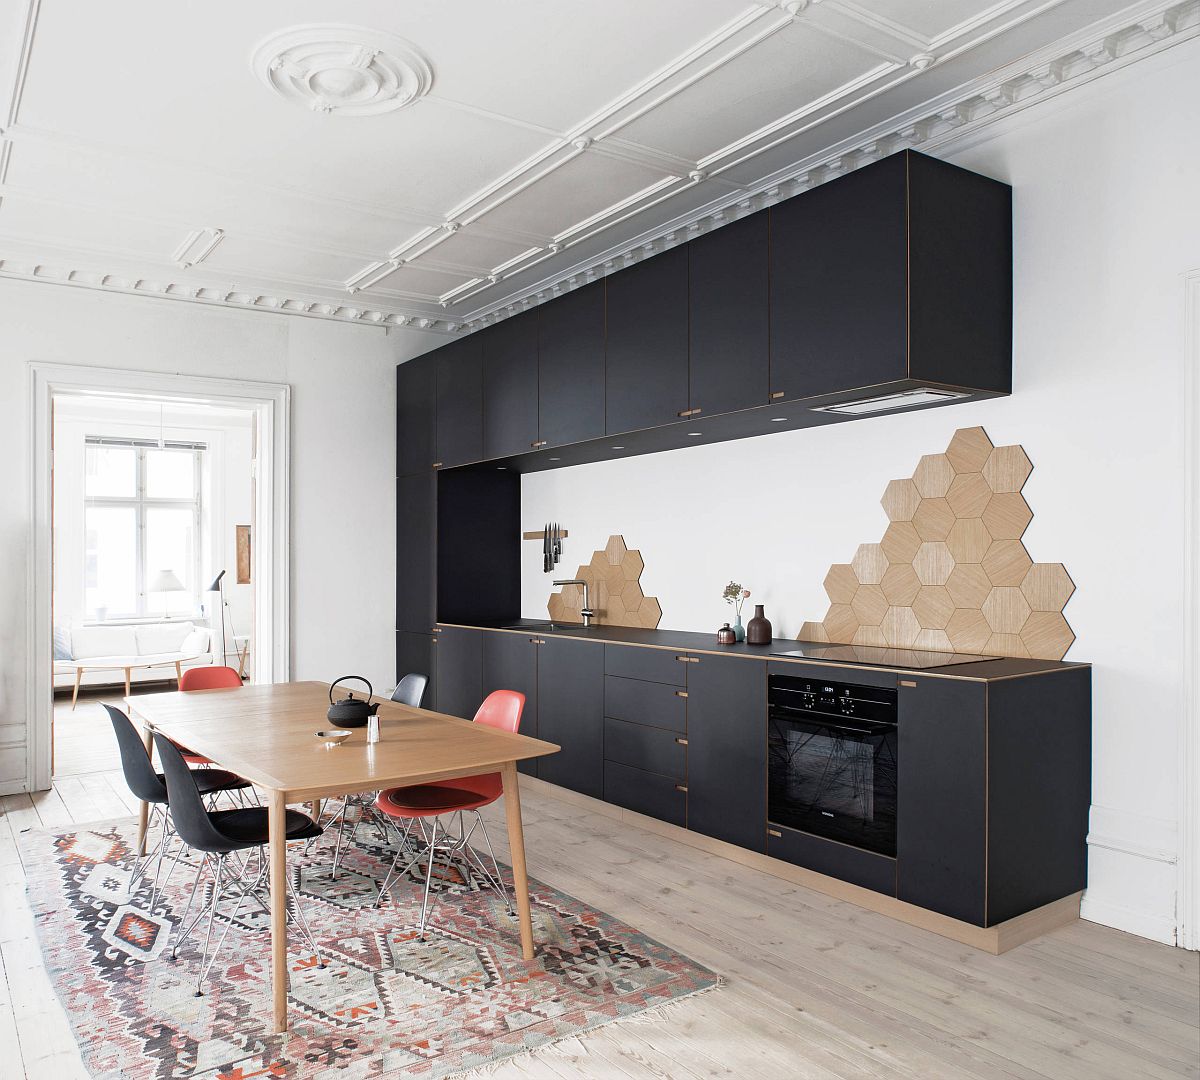 sleek-and-stunning-single-wall-kitchen-design-with-minimal-Scandinavian-style-37495